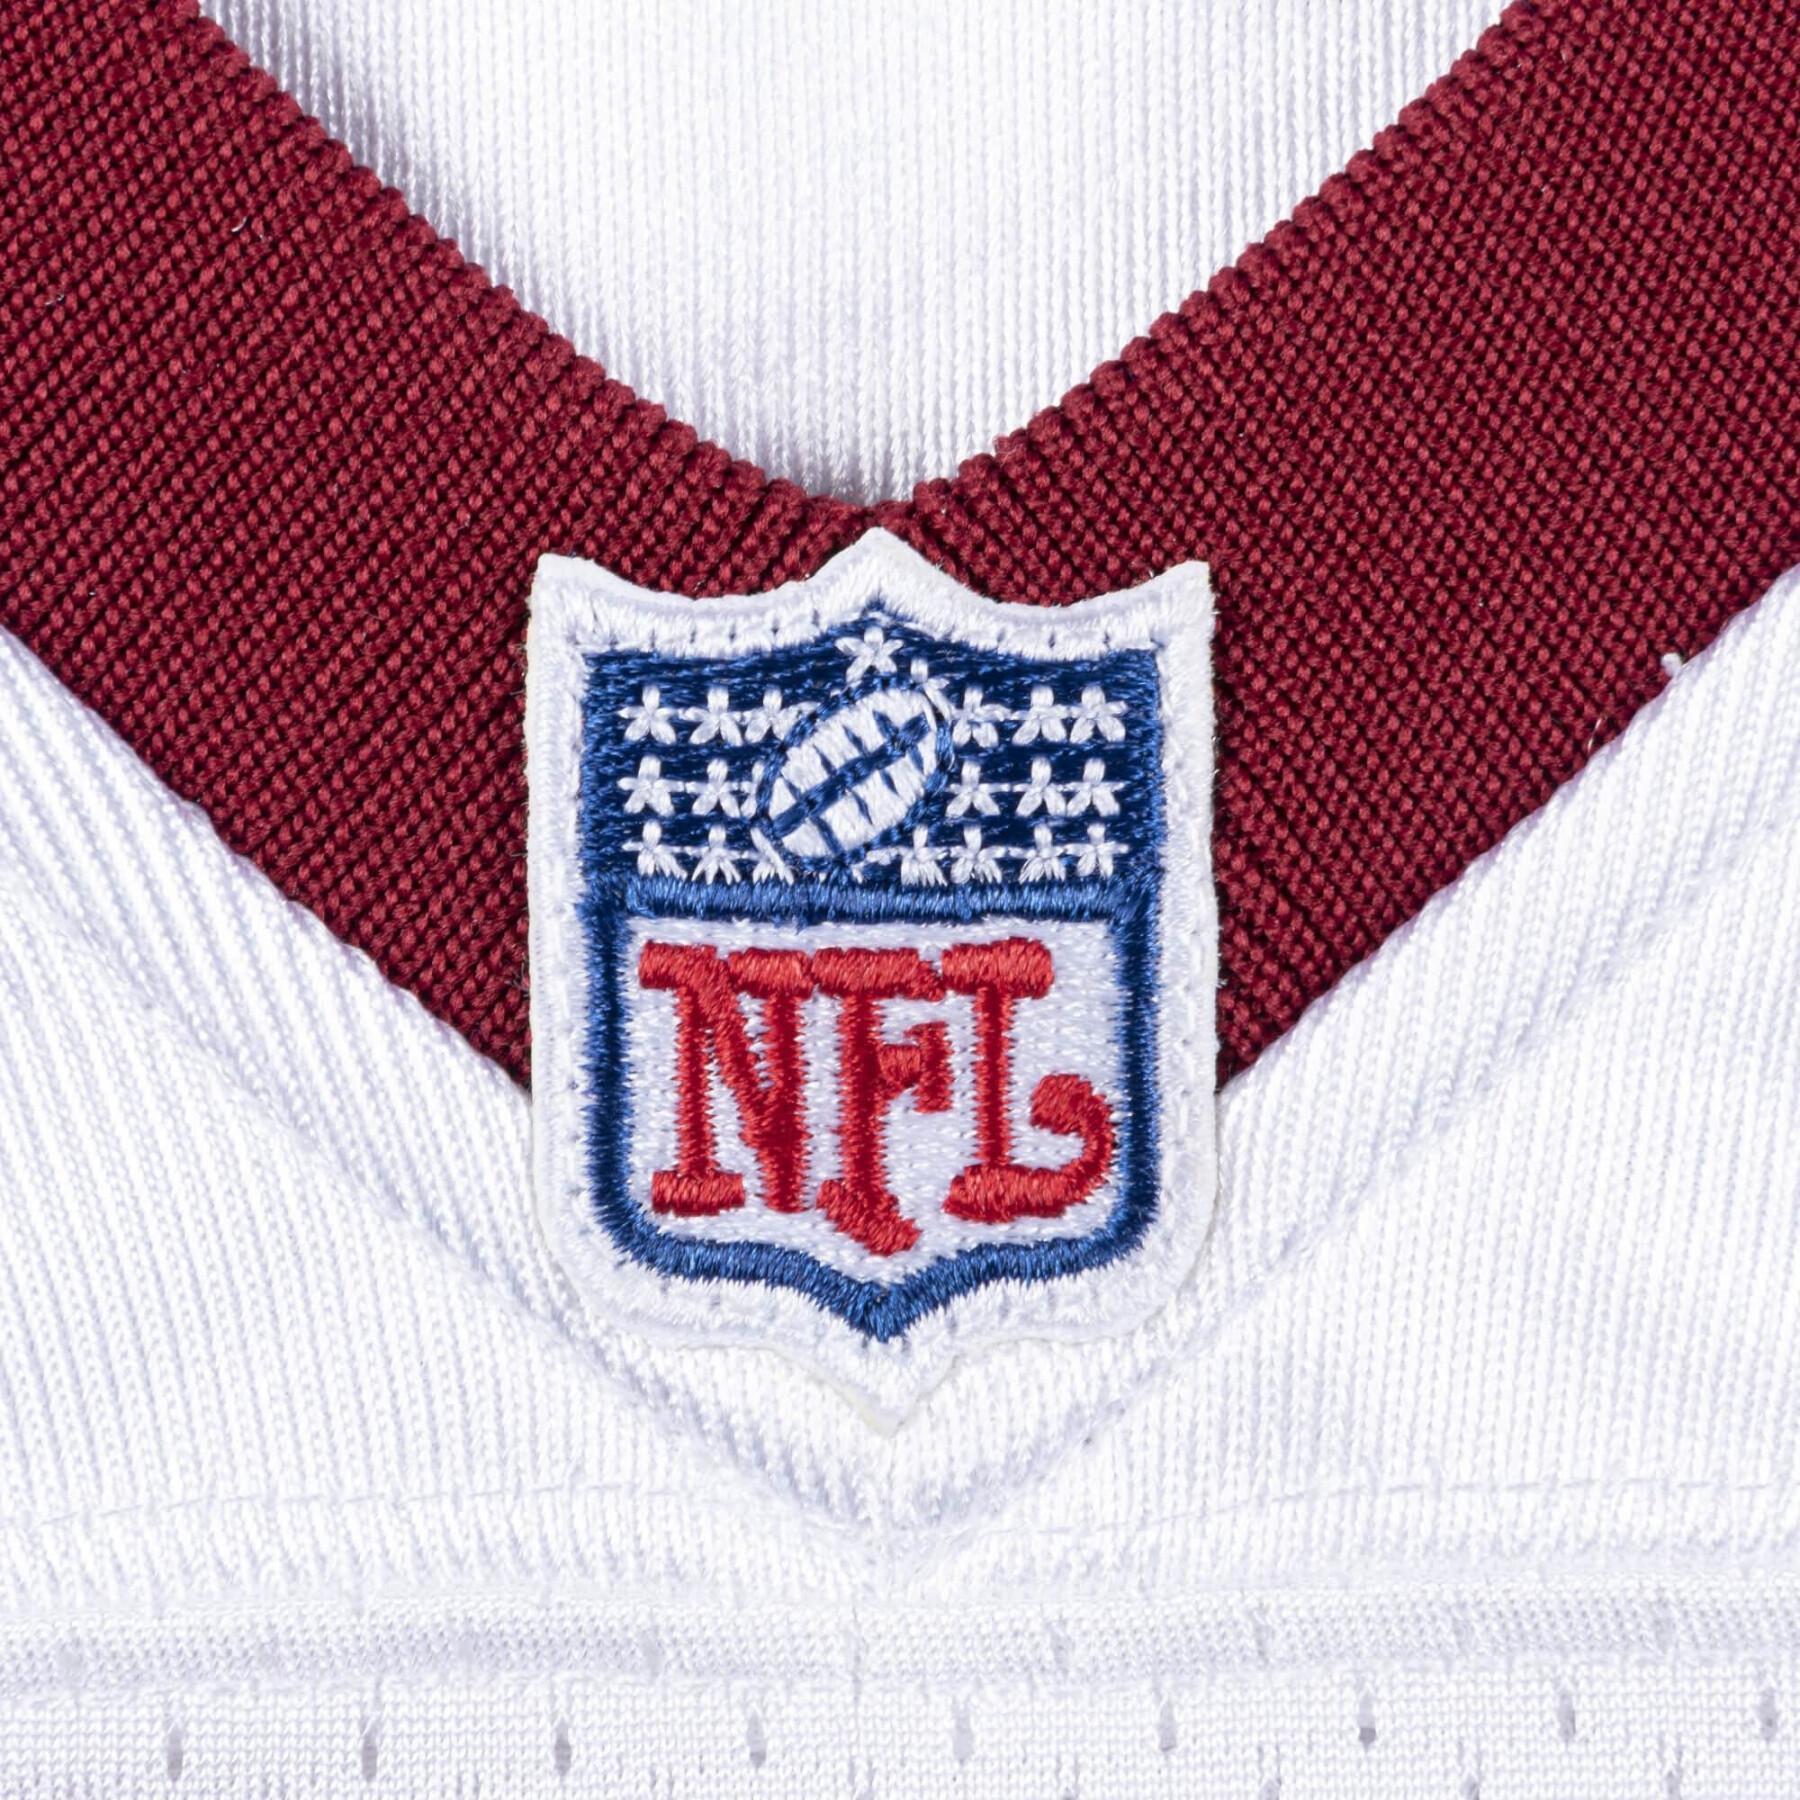 Camiseta auténtica Redskins NFL 91 Darrell Green